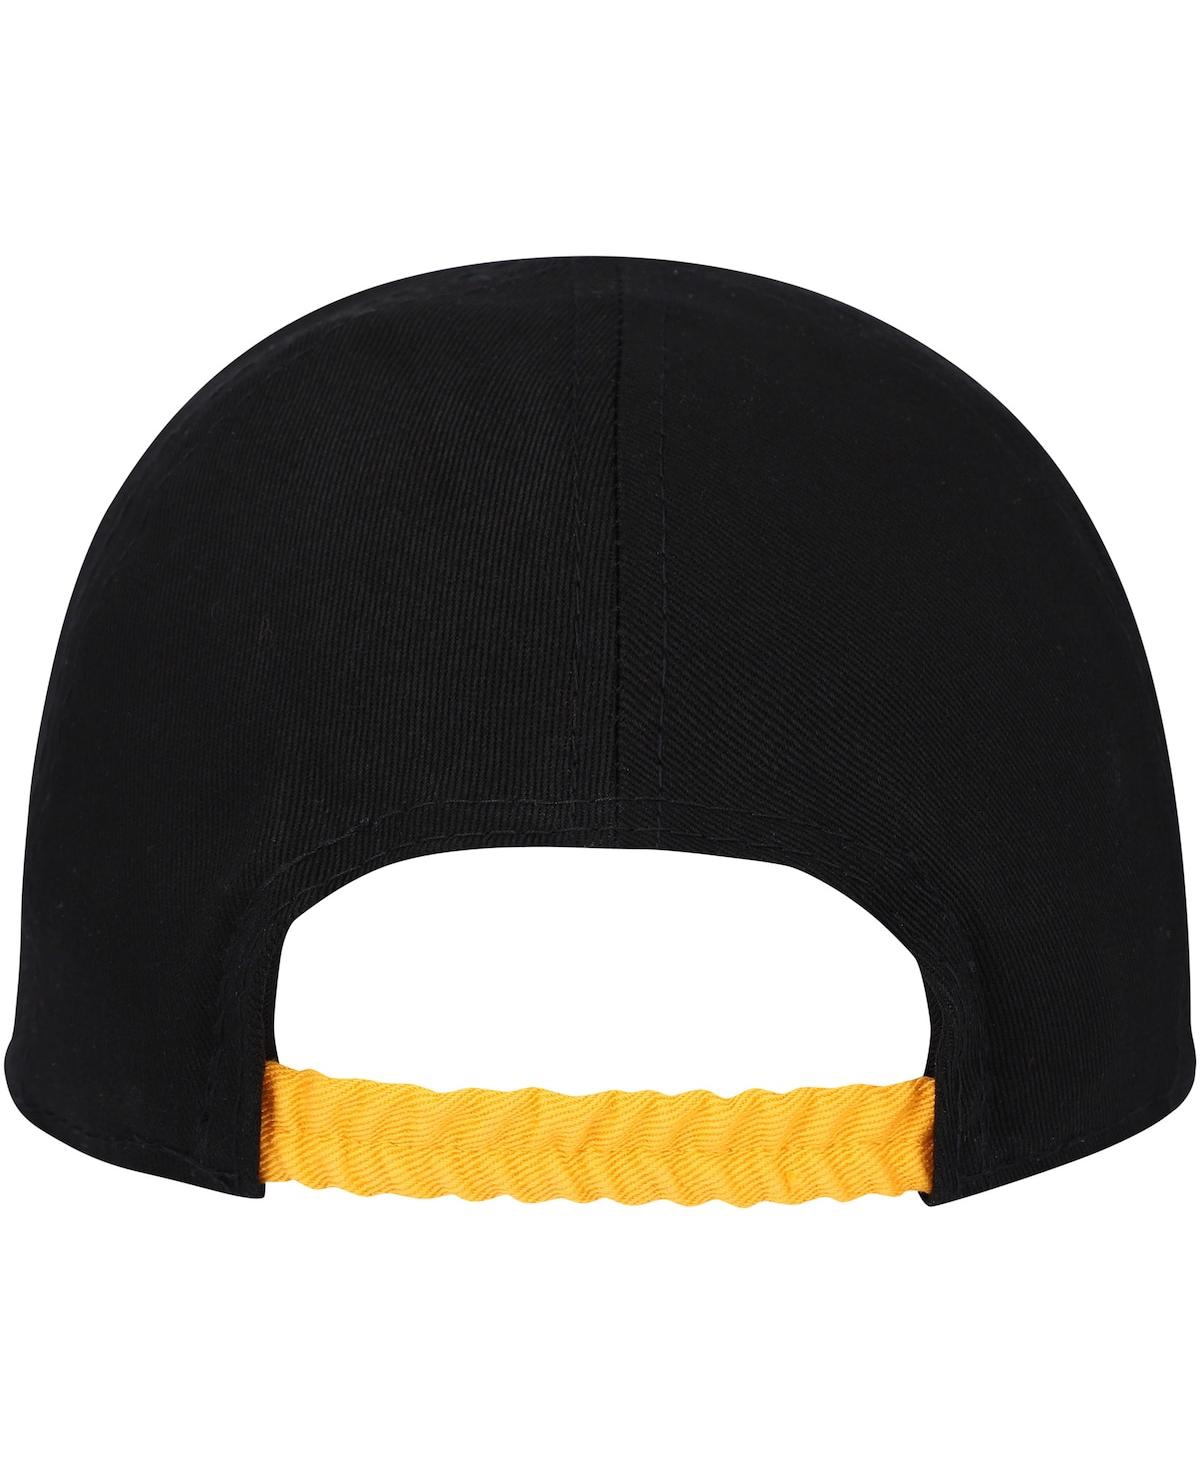 Shop New Era Infant Boys And Girls  Black Pittsburgh Pirates Team Color My First 9twenty Flex Hat